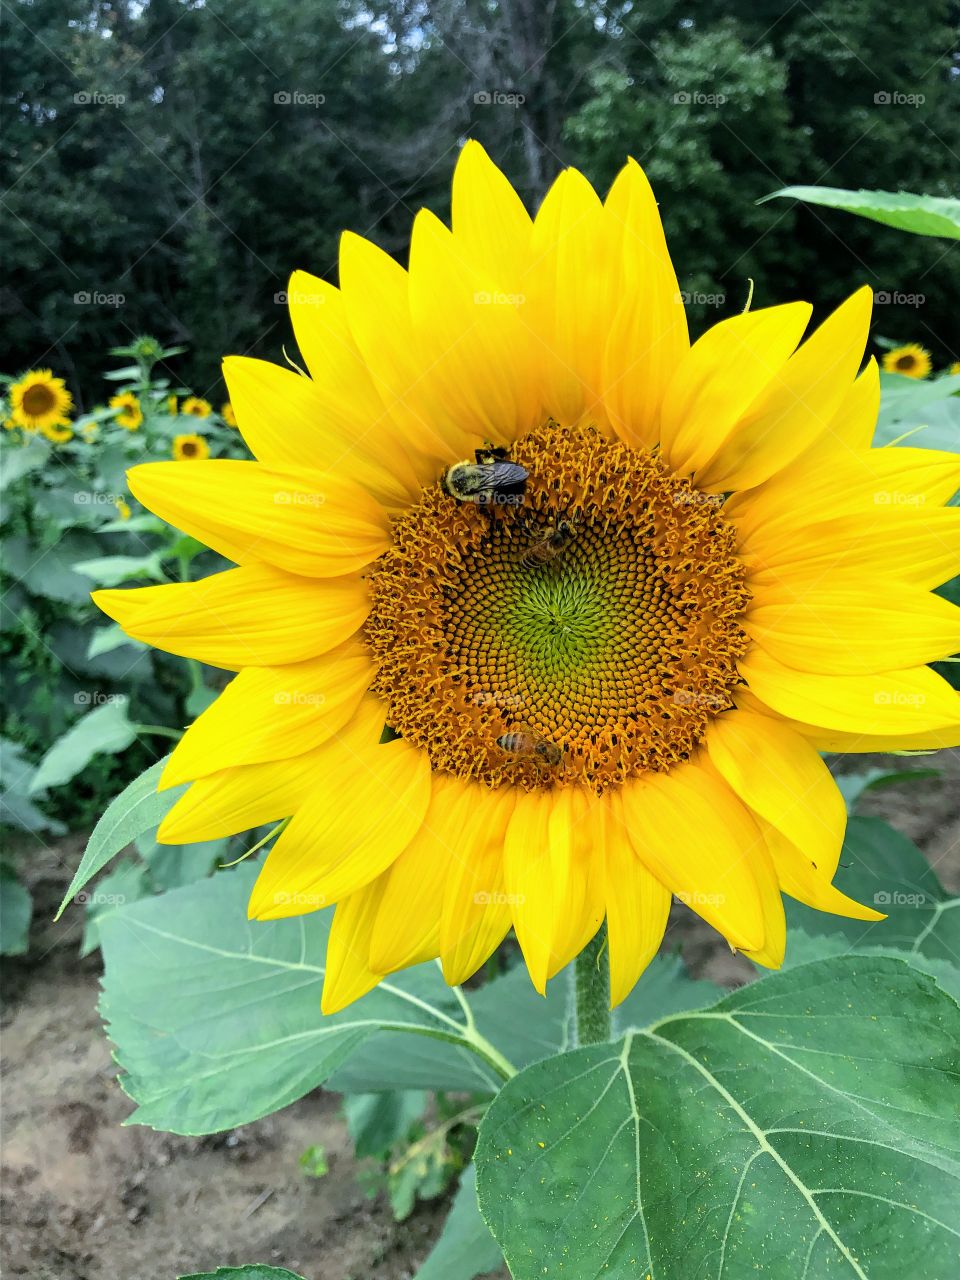 Bee on a sunflower 